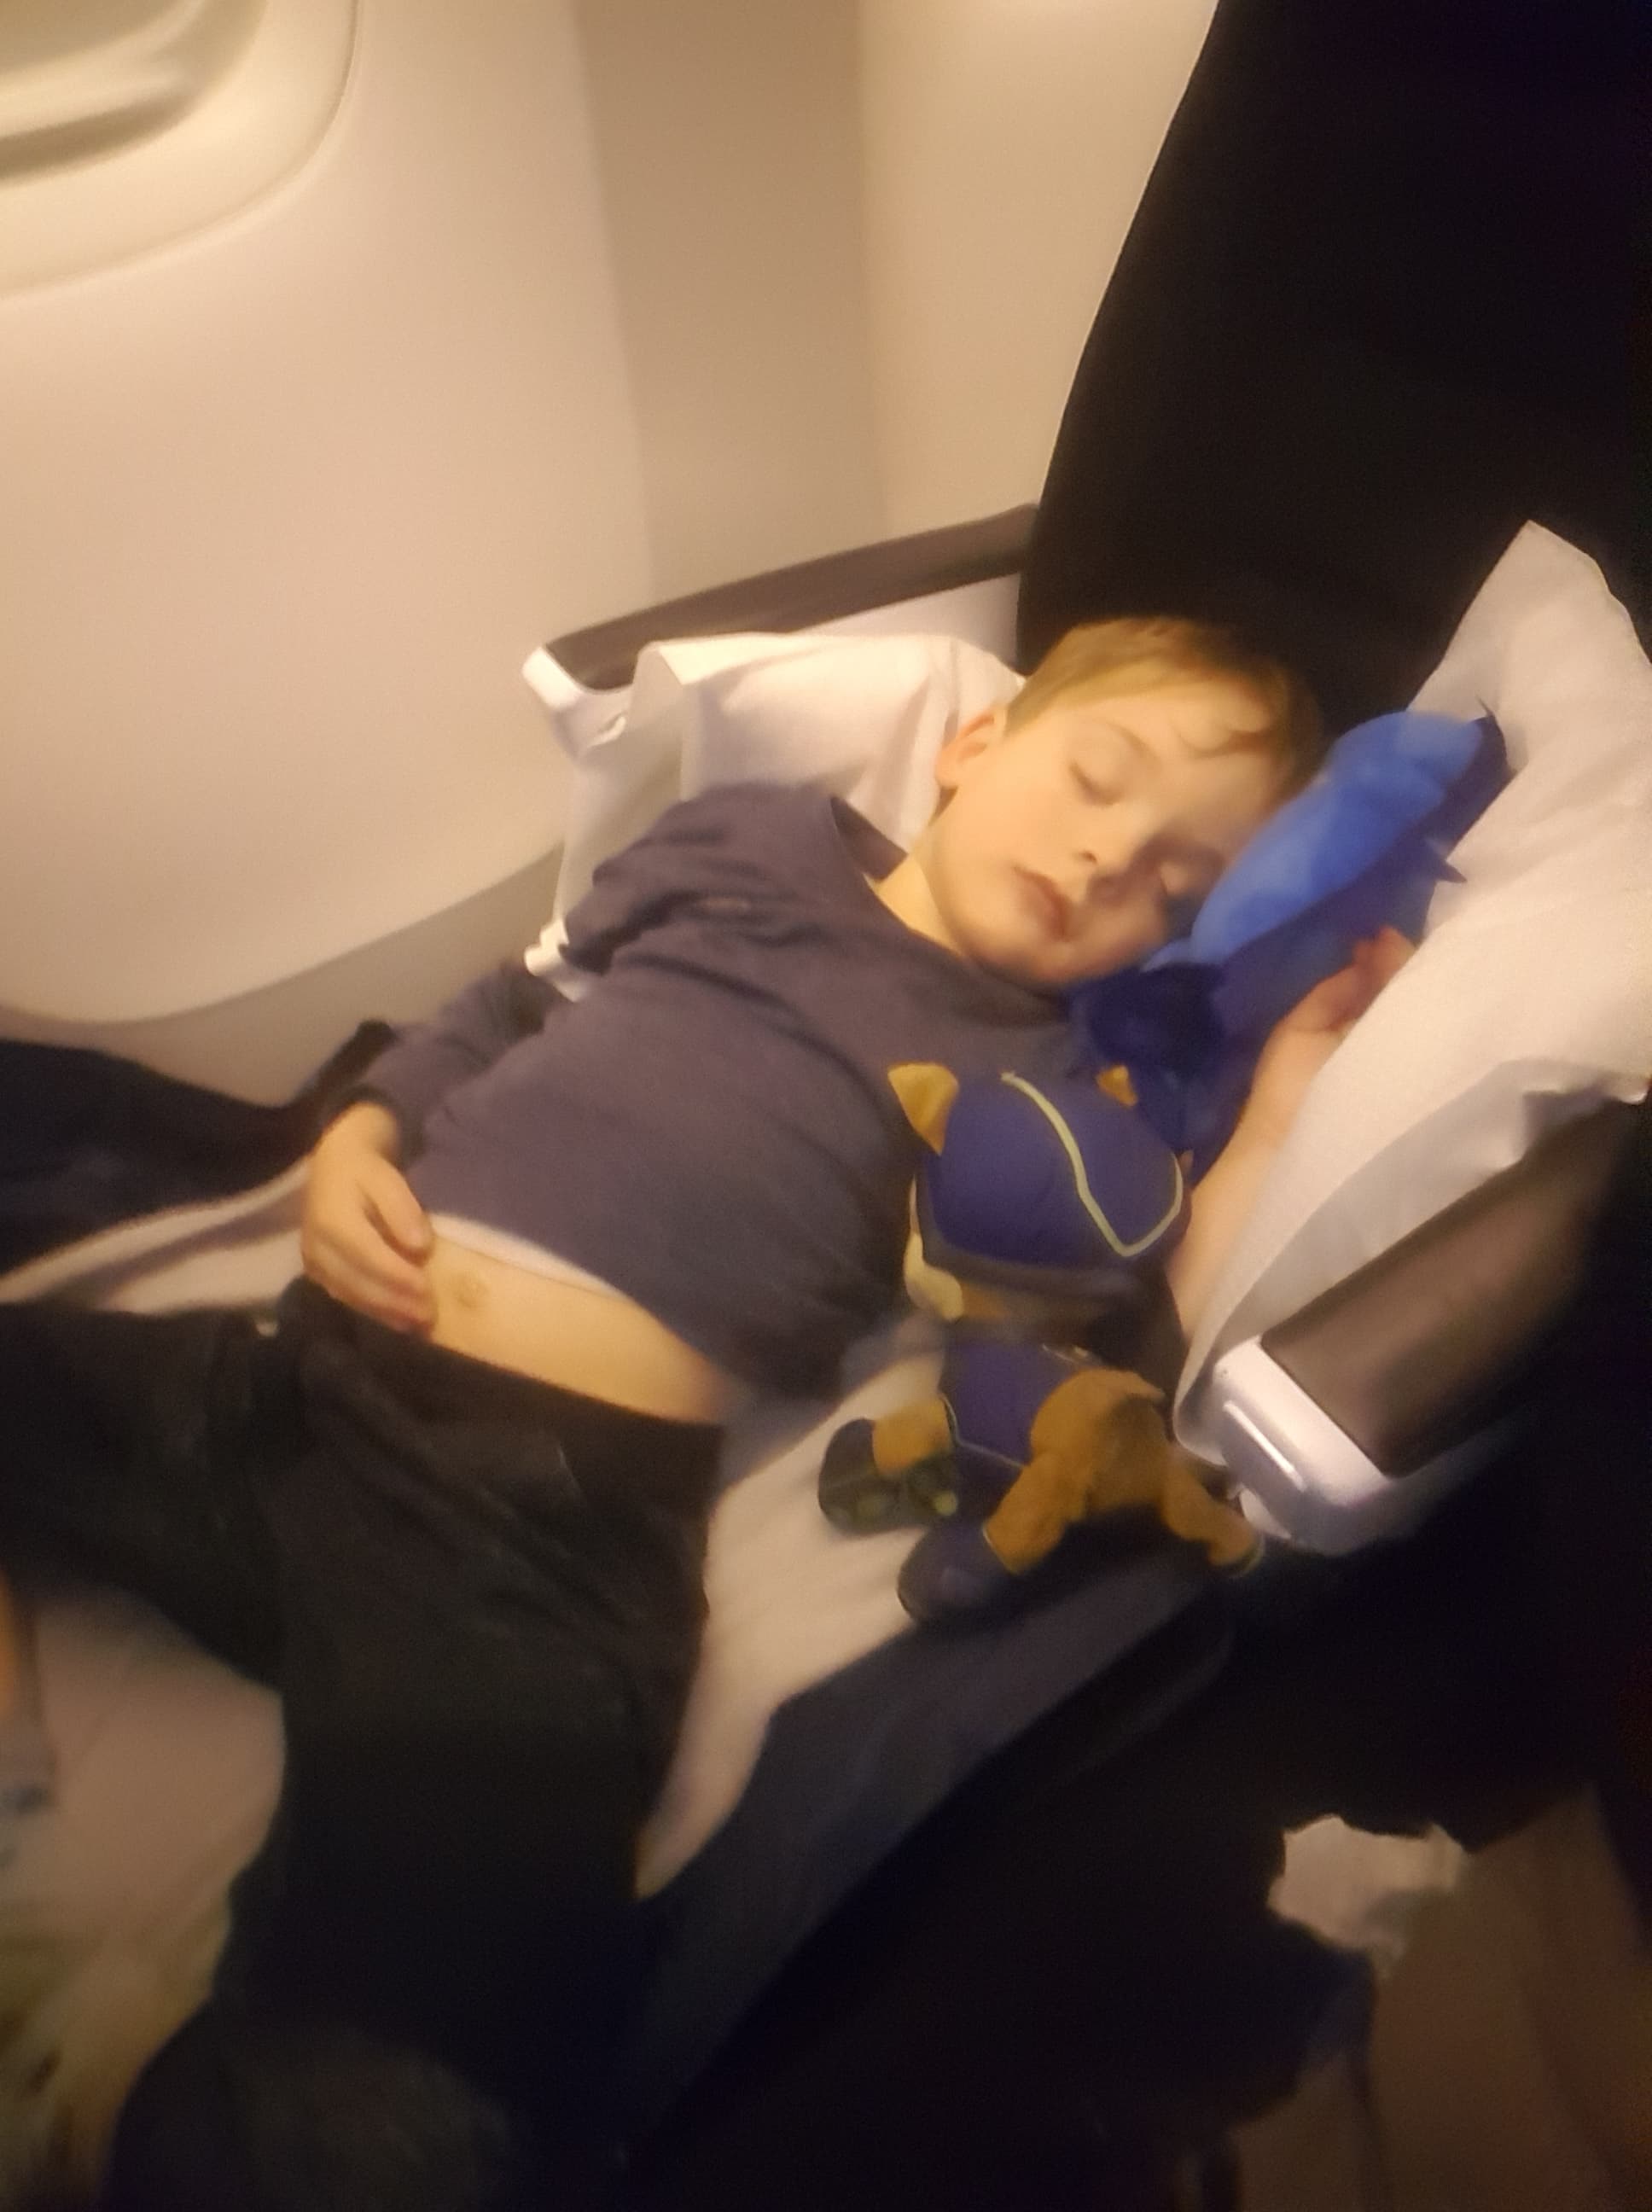 "He slept for 10 straight hours 😊" - Rachel, Air New Zealand